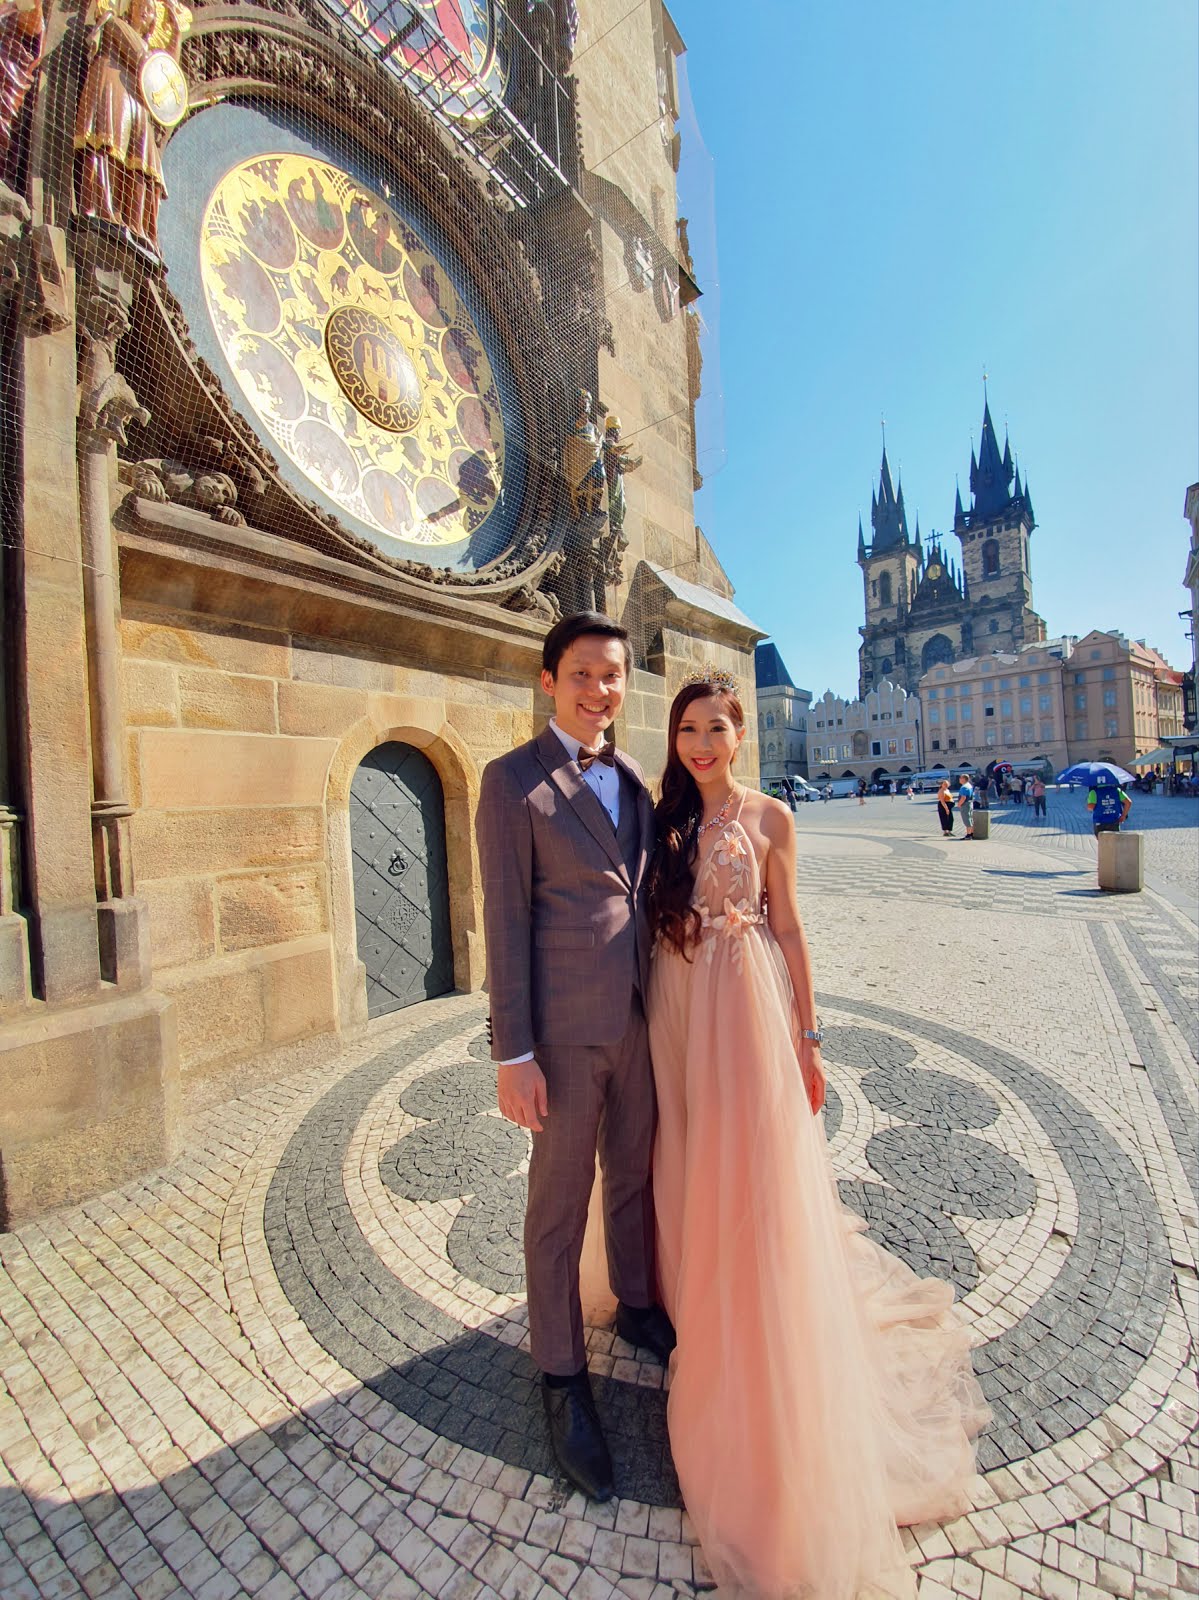 Dr VT & Sara Shantelle Lim's Pre Wedding Photos & Videos taken in PRAGUE CZECH REPUBLIC